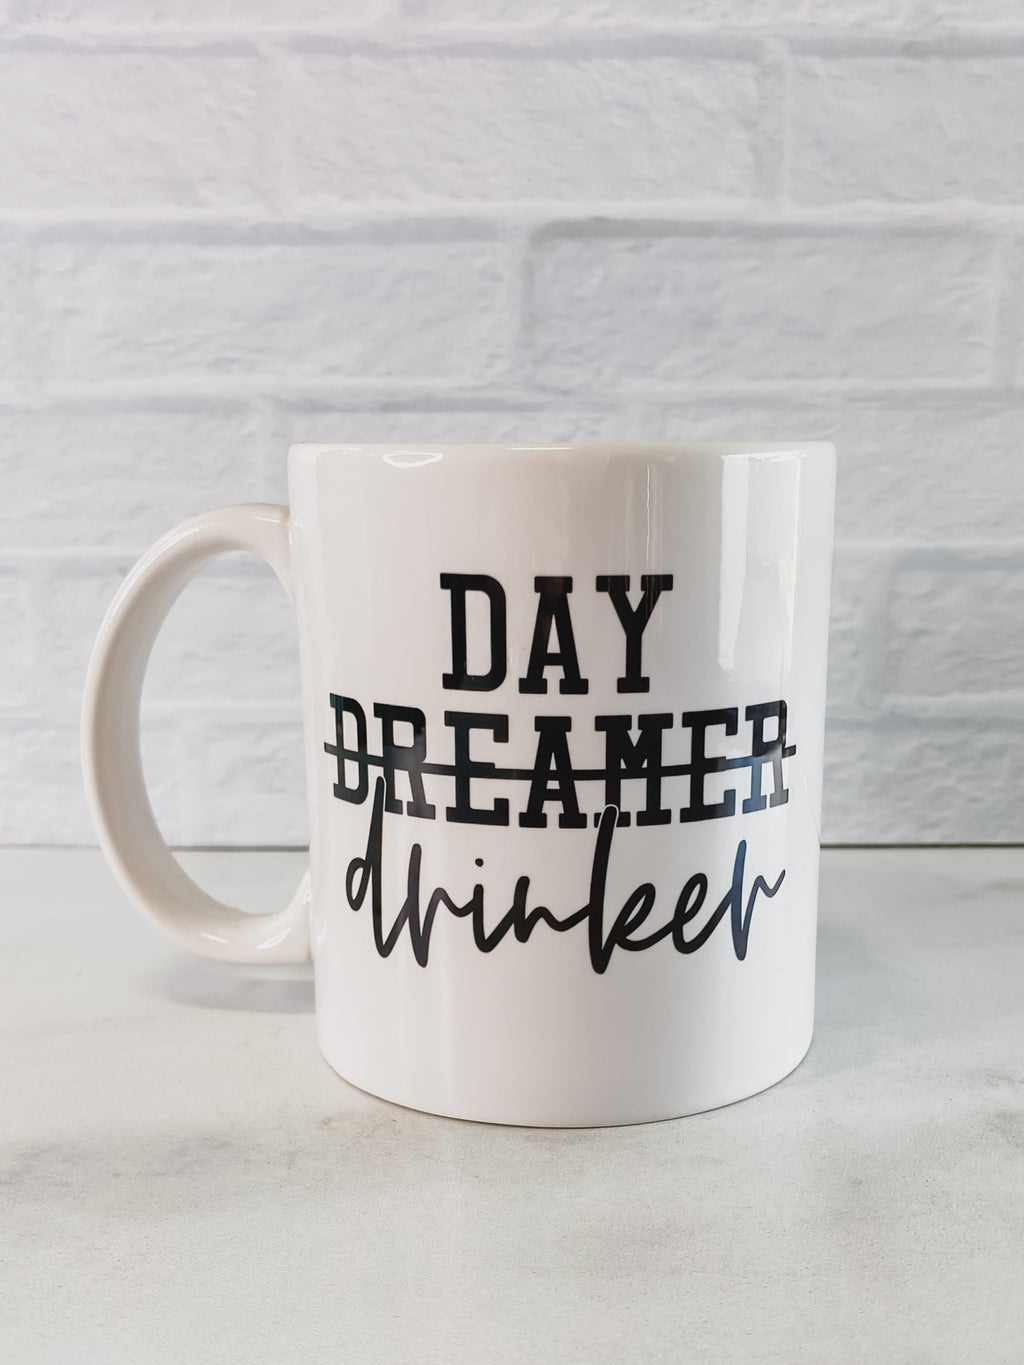 Day Drinker Mug - Stitch And Feather